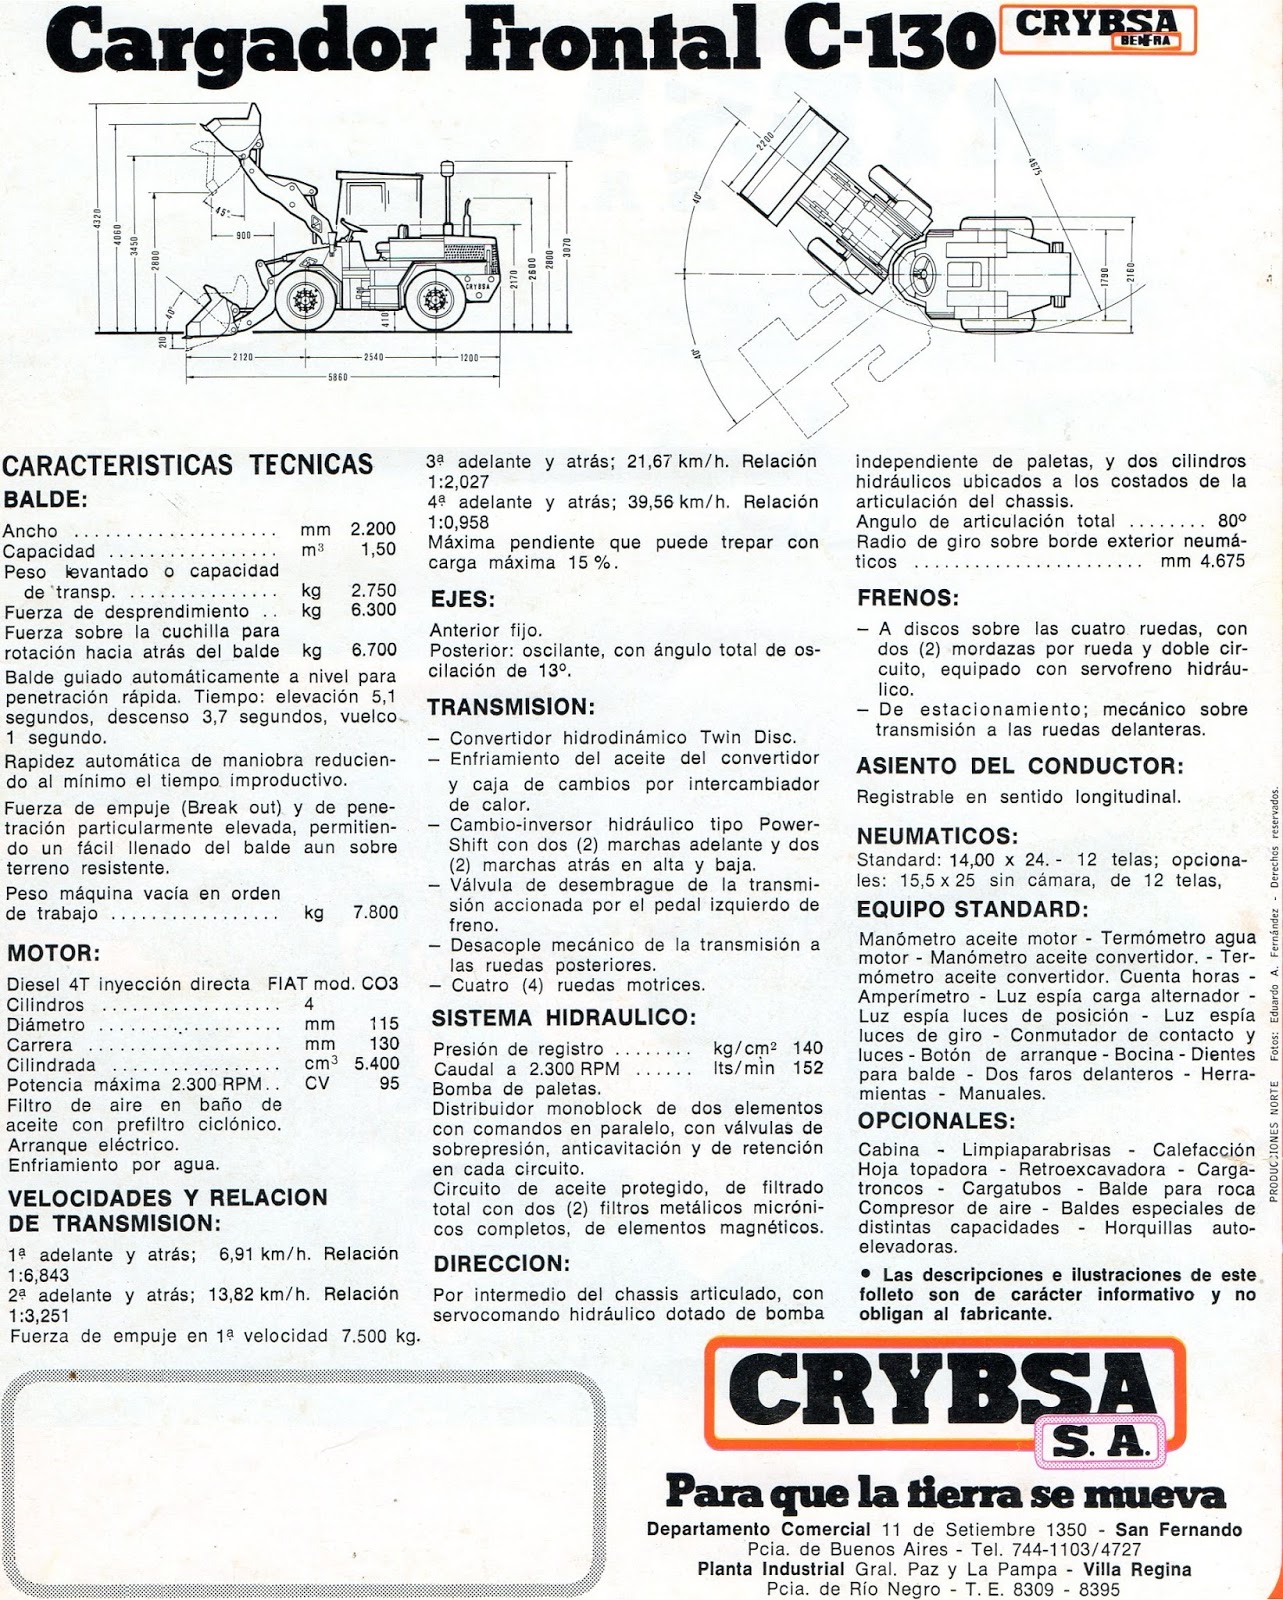 CrybSA  trattori argentini Img667